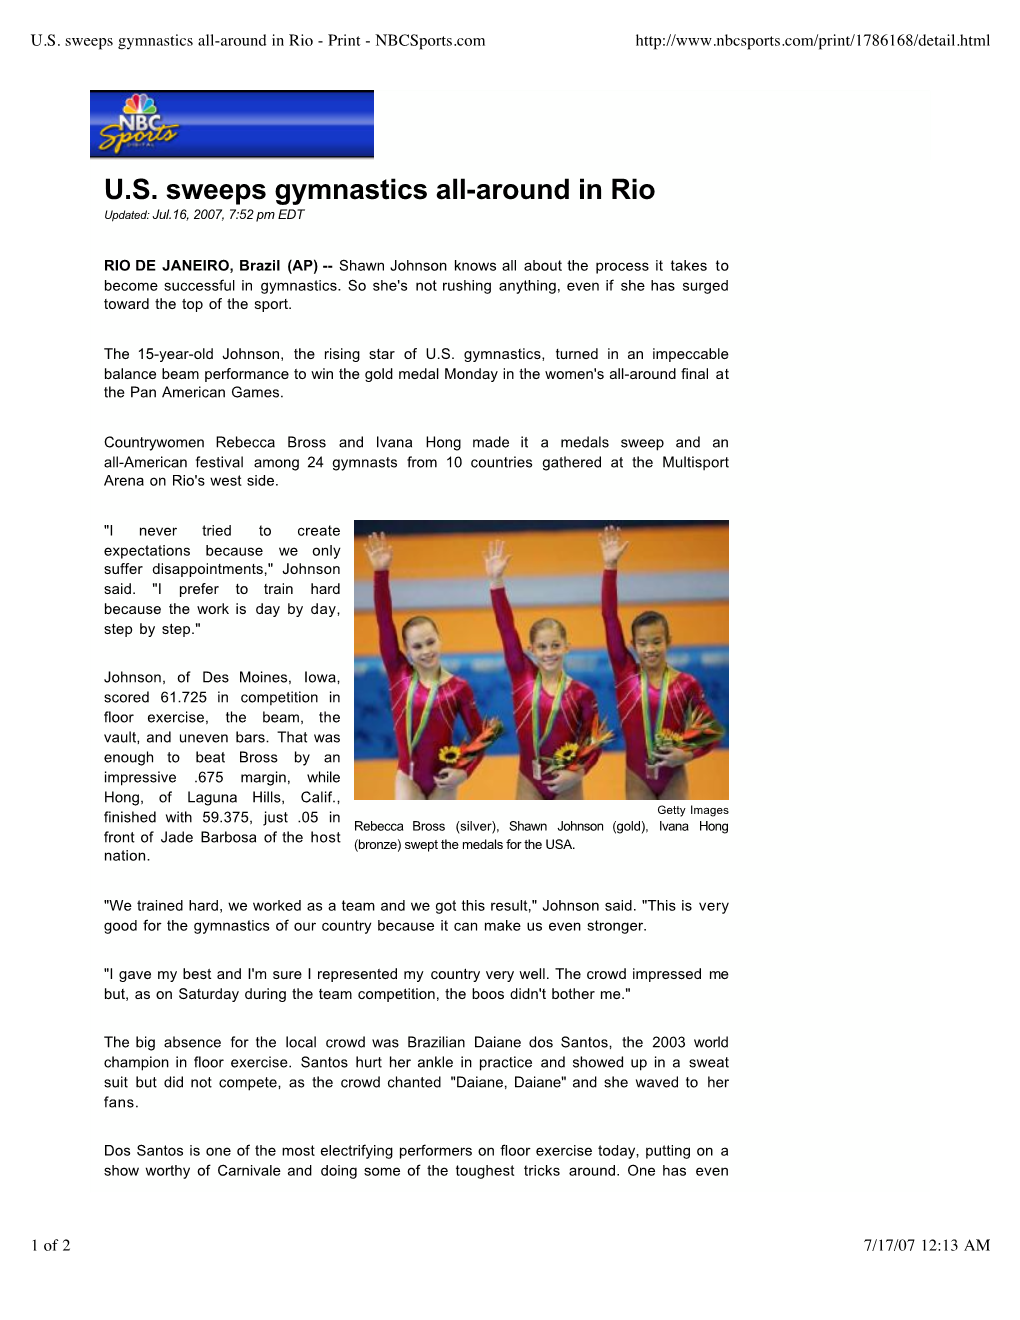 U.S. Sweeps Gymnastics All-Around in Rio - Print - Nbcsports.Com